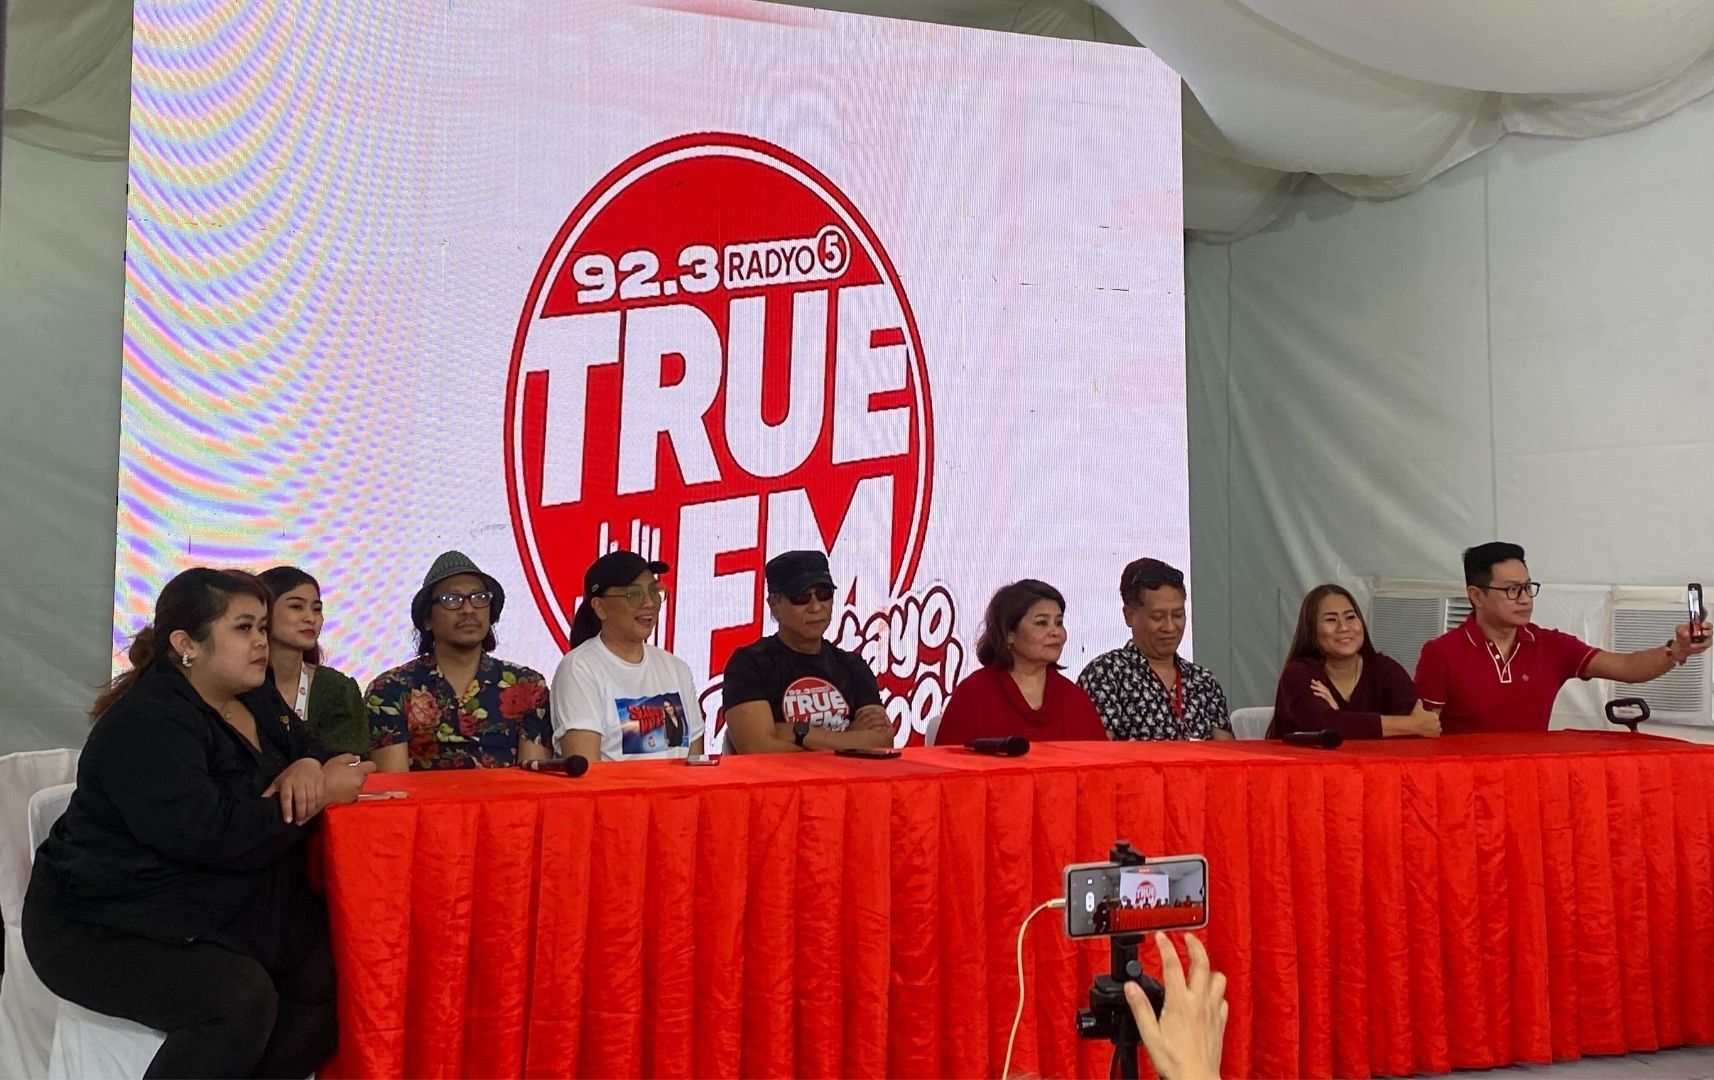 Radyo5 berganti nama menjadi 92.3 Radyo5 TRUE FM